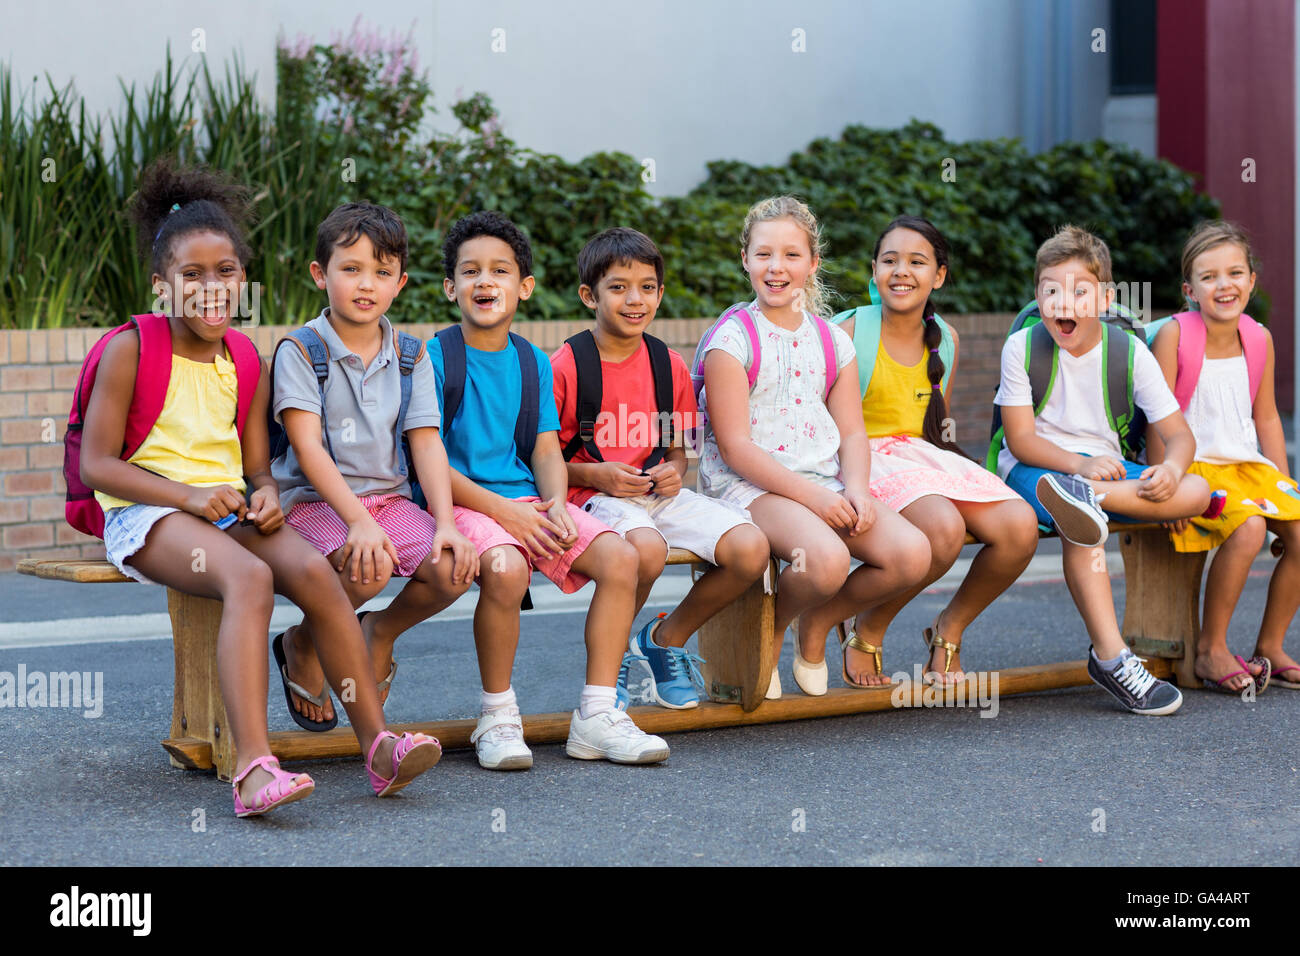 Smiling schoolchildren on seat Stock Photo